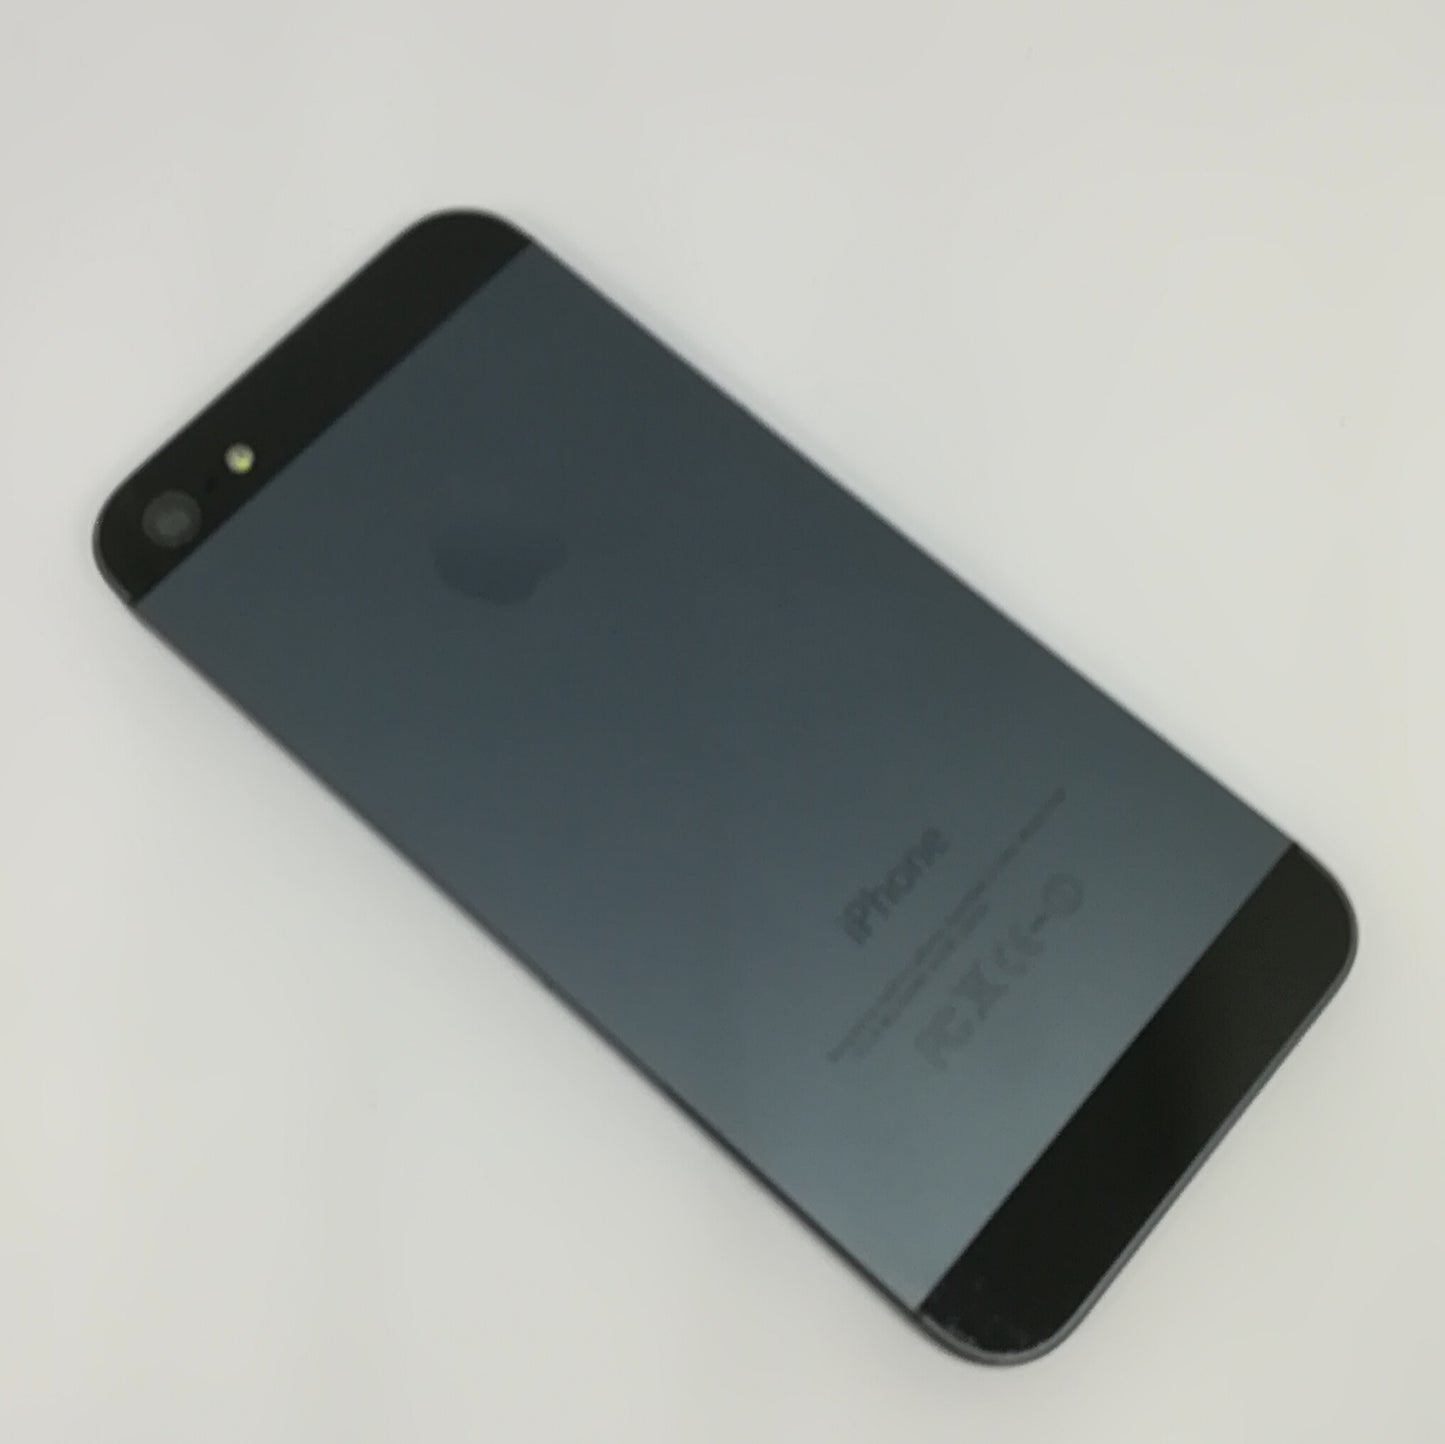 Apple iPhone 5 16GB Space Grey EE